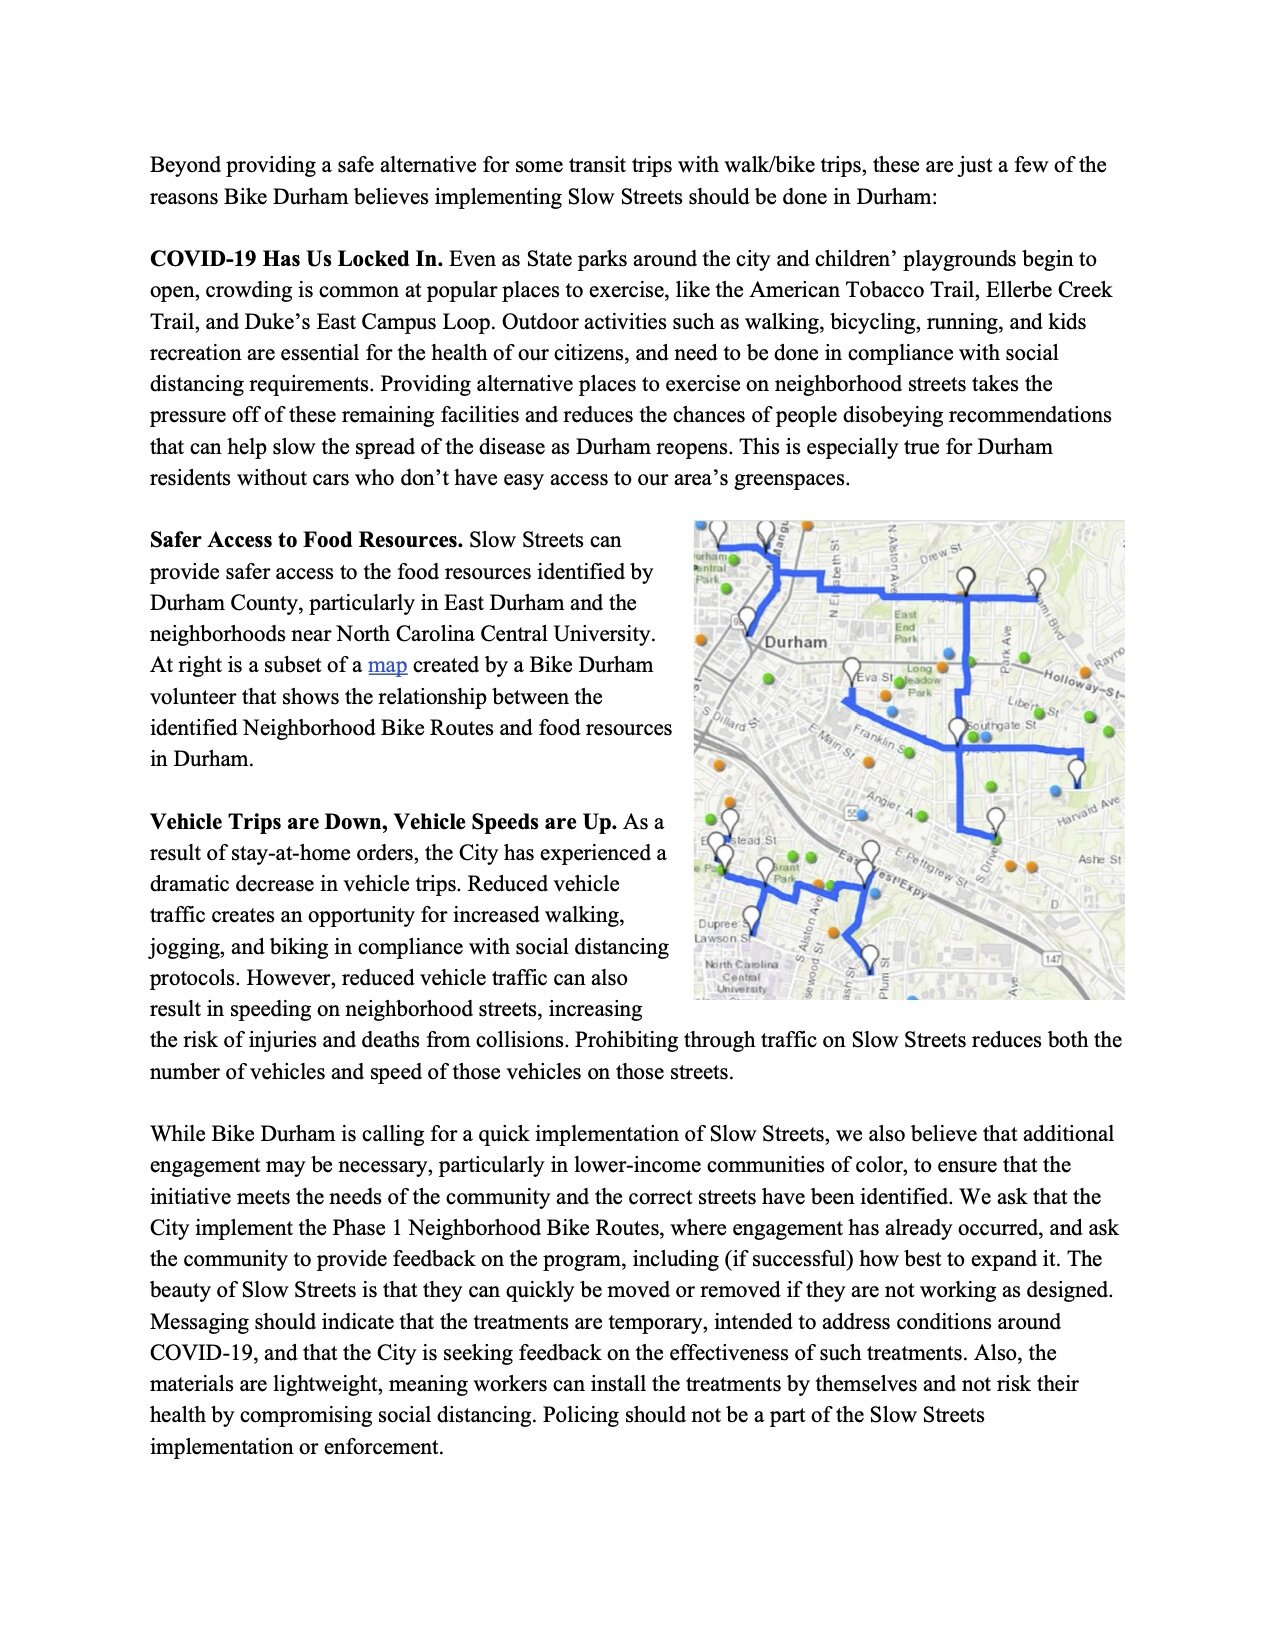 COVID-19 Transportation Response - Letter to the City 3.jpg